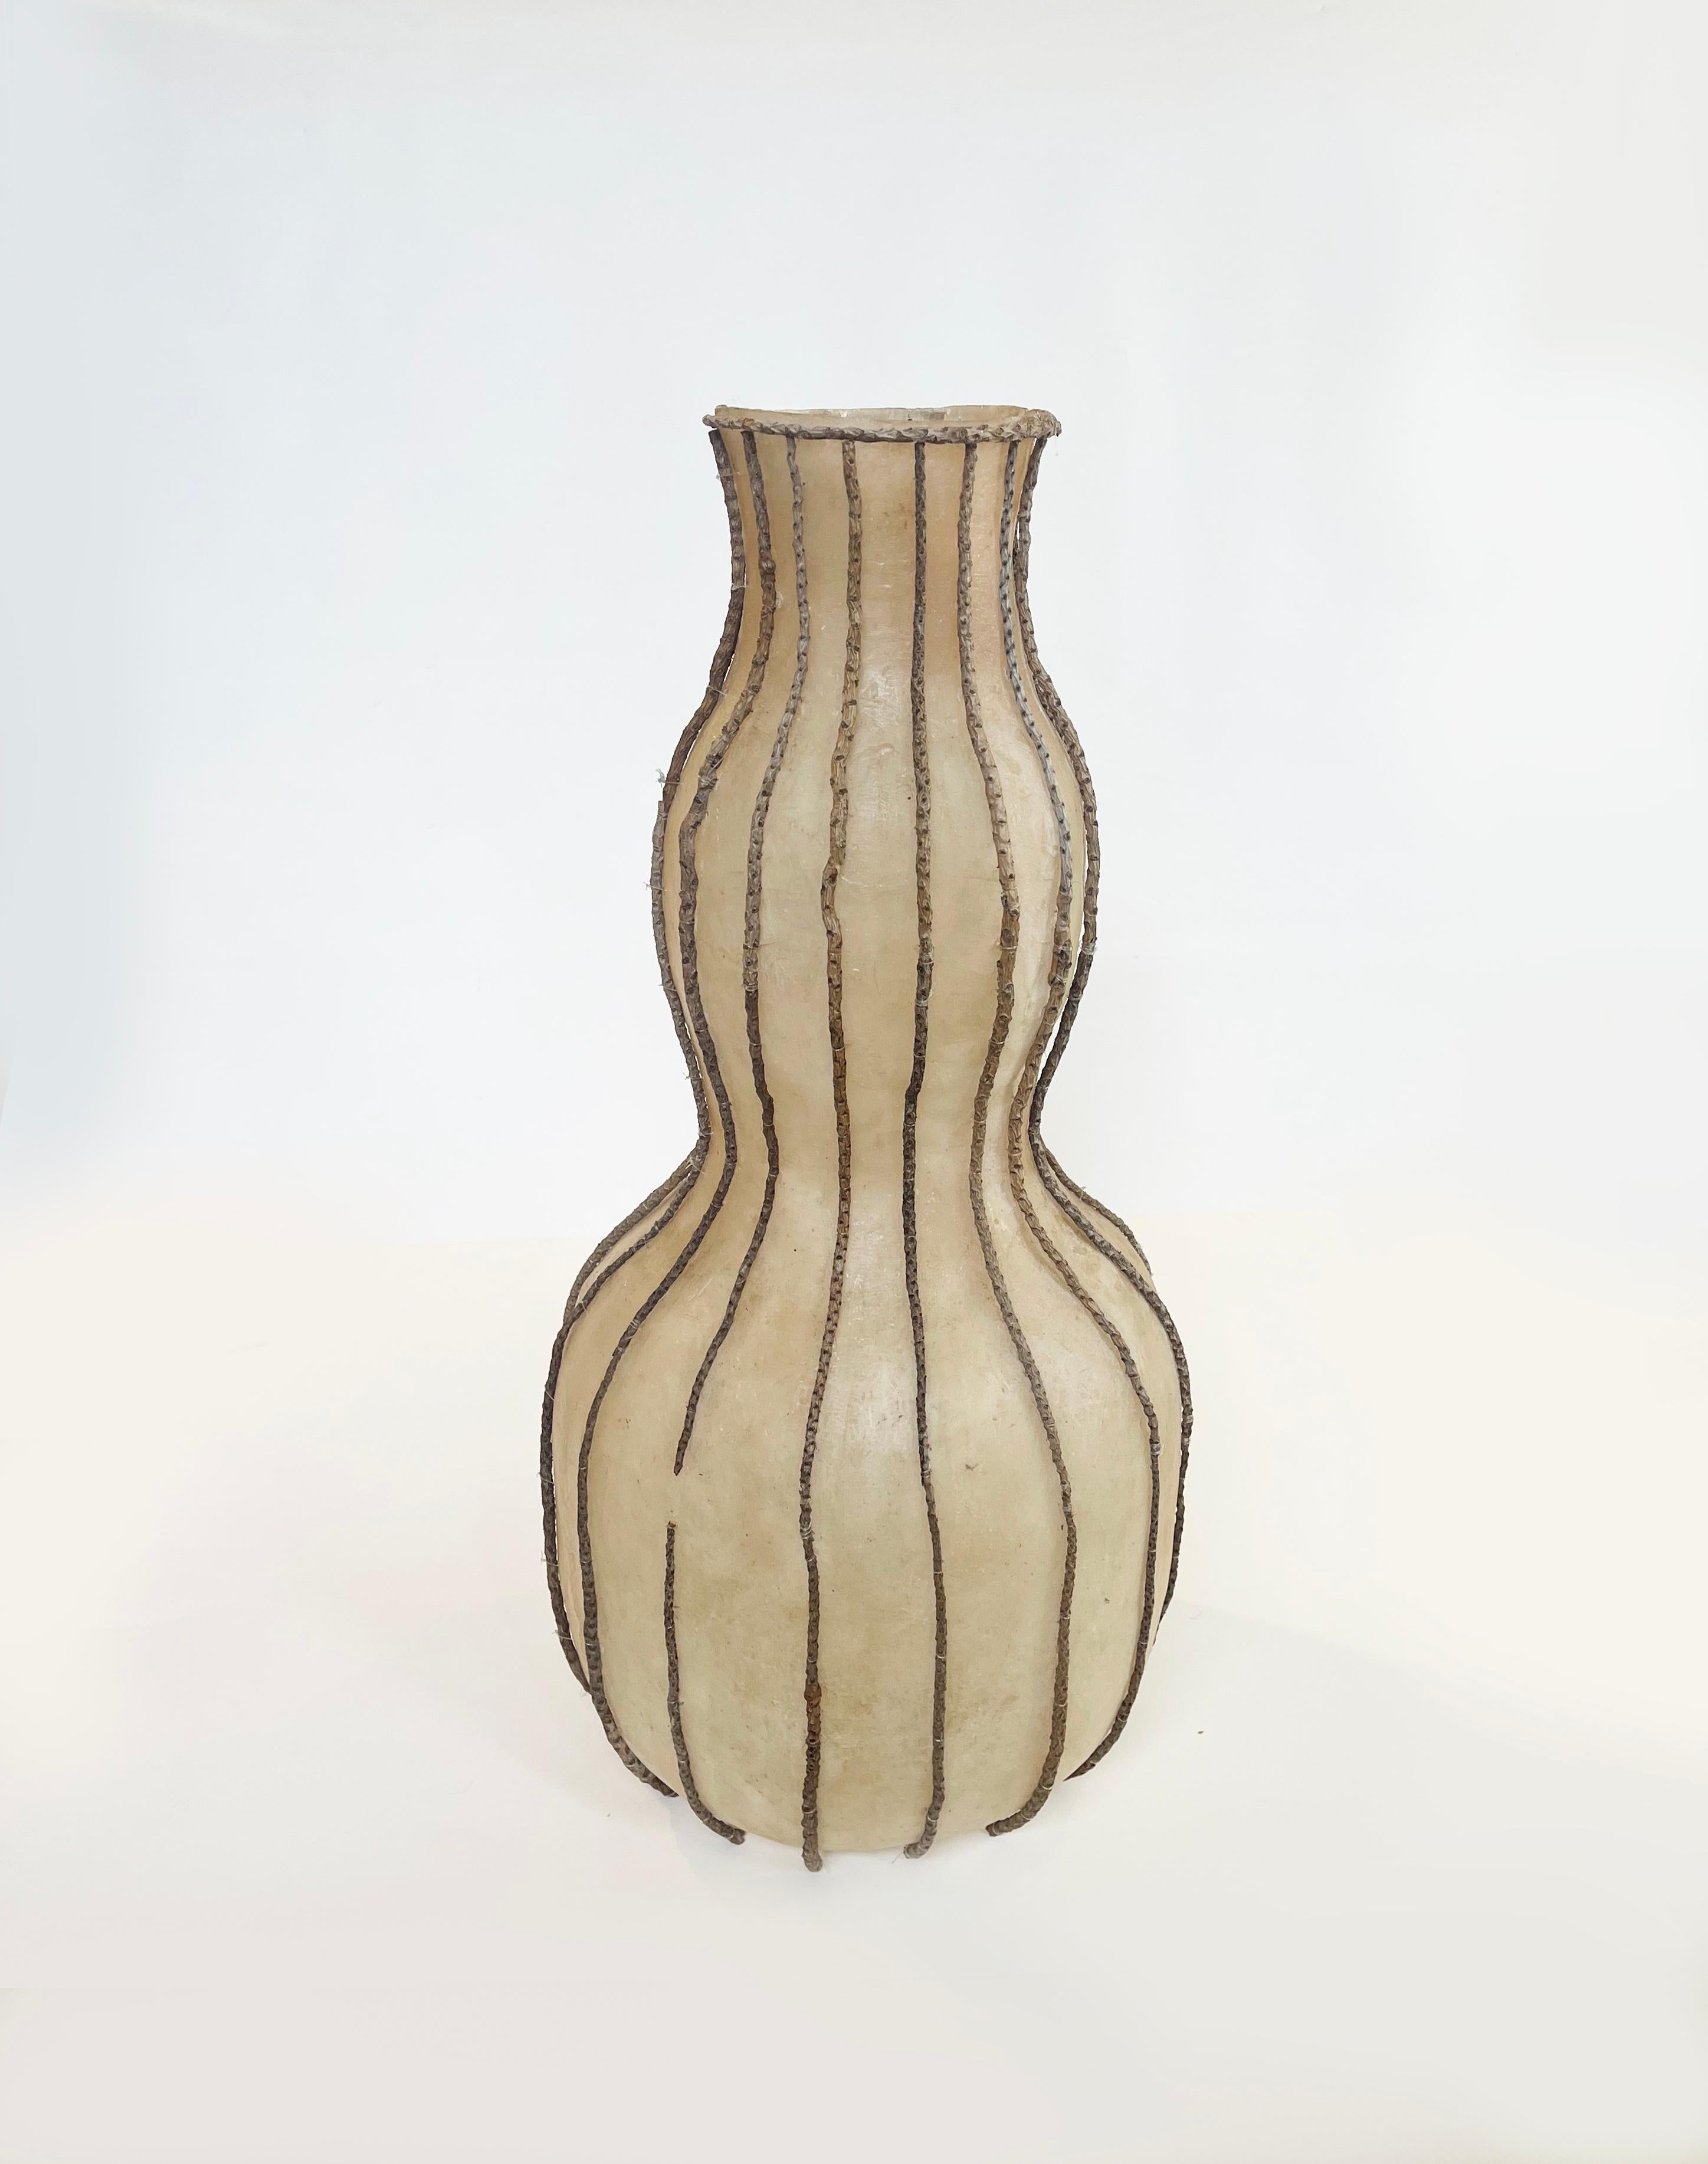 German Modern Ethnic African Art Style Gourd Vessel or Vase Twigs & Fiberglass, 1970s For Sale